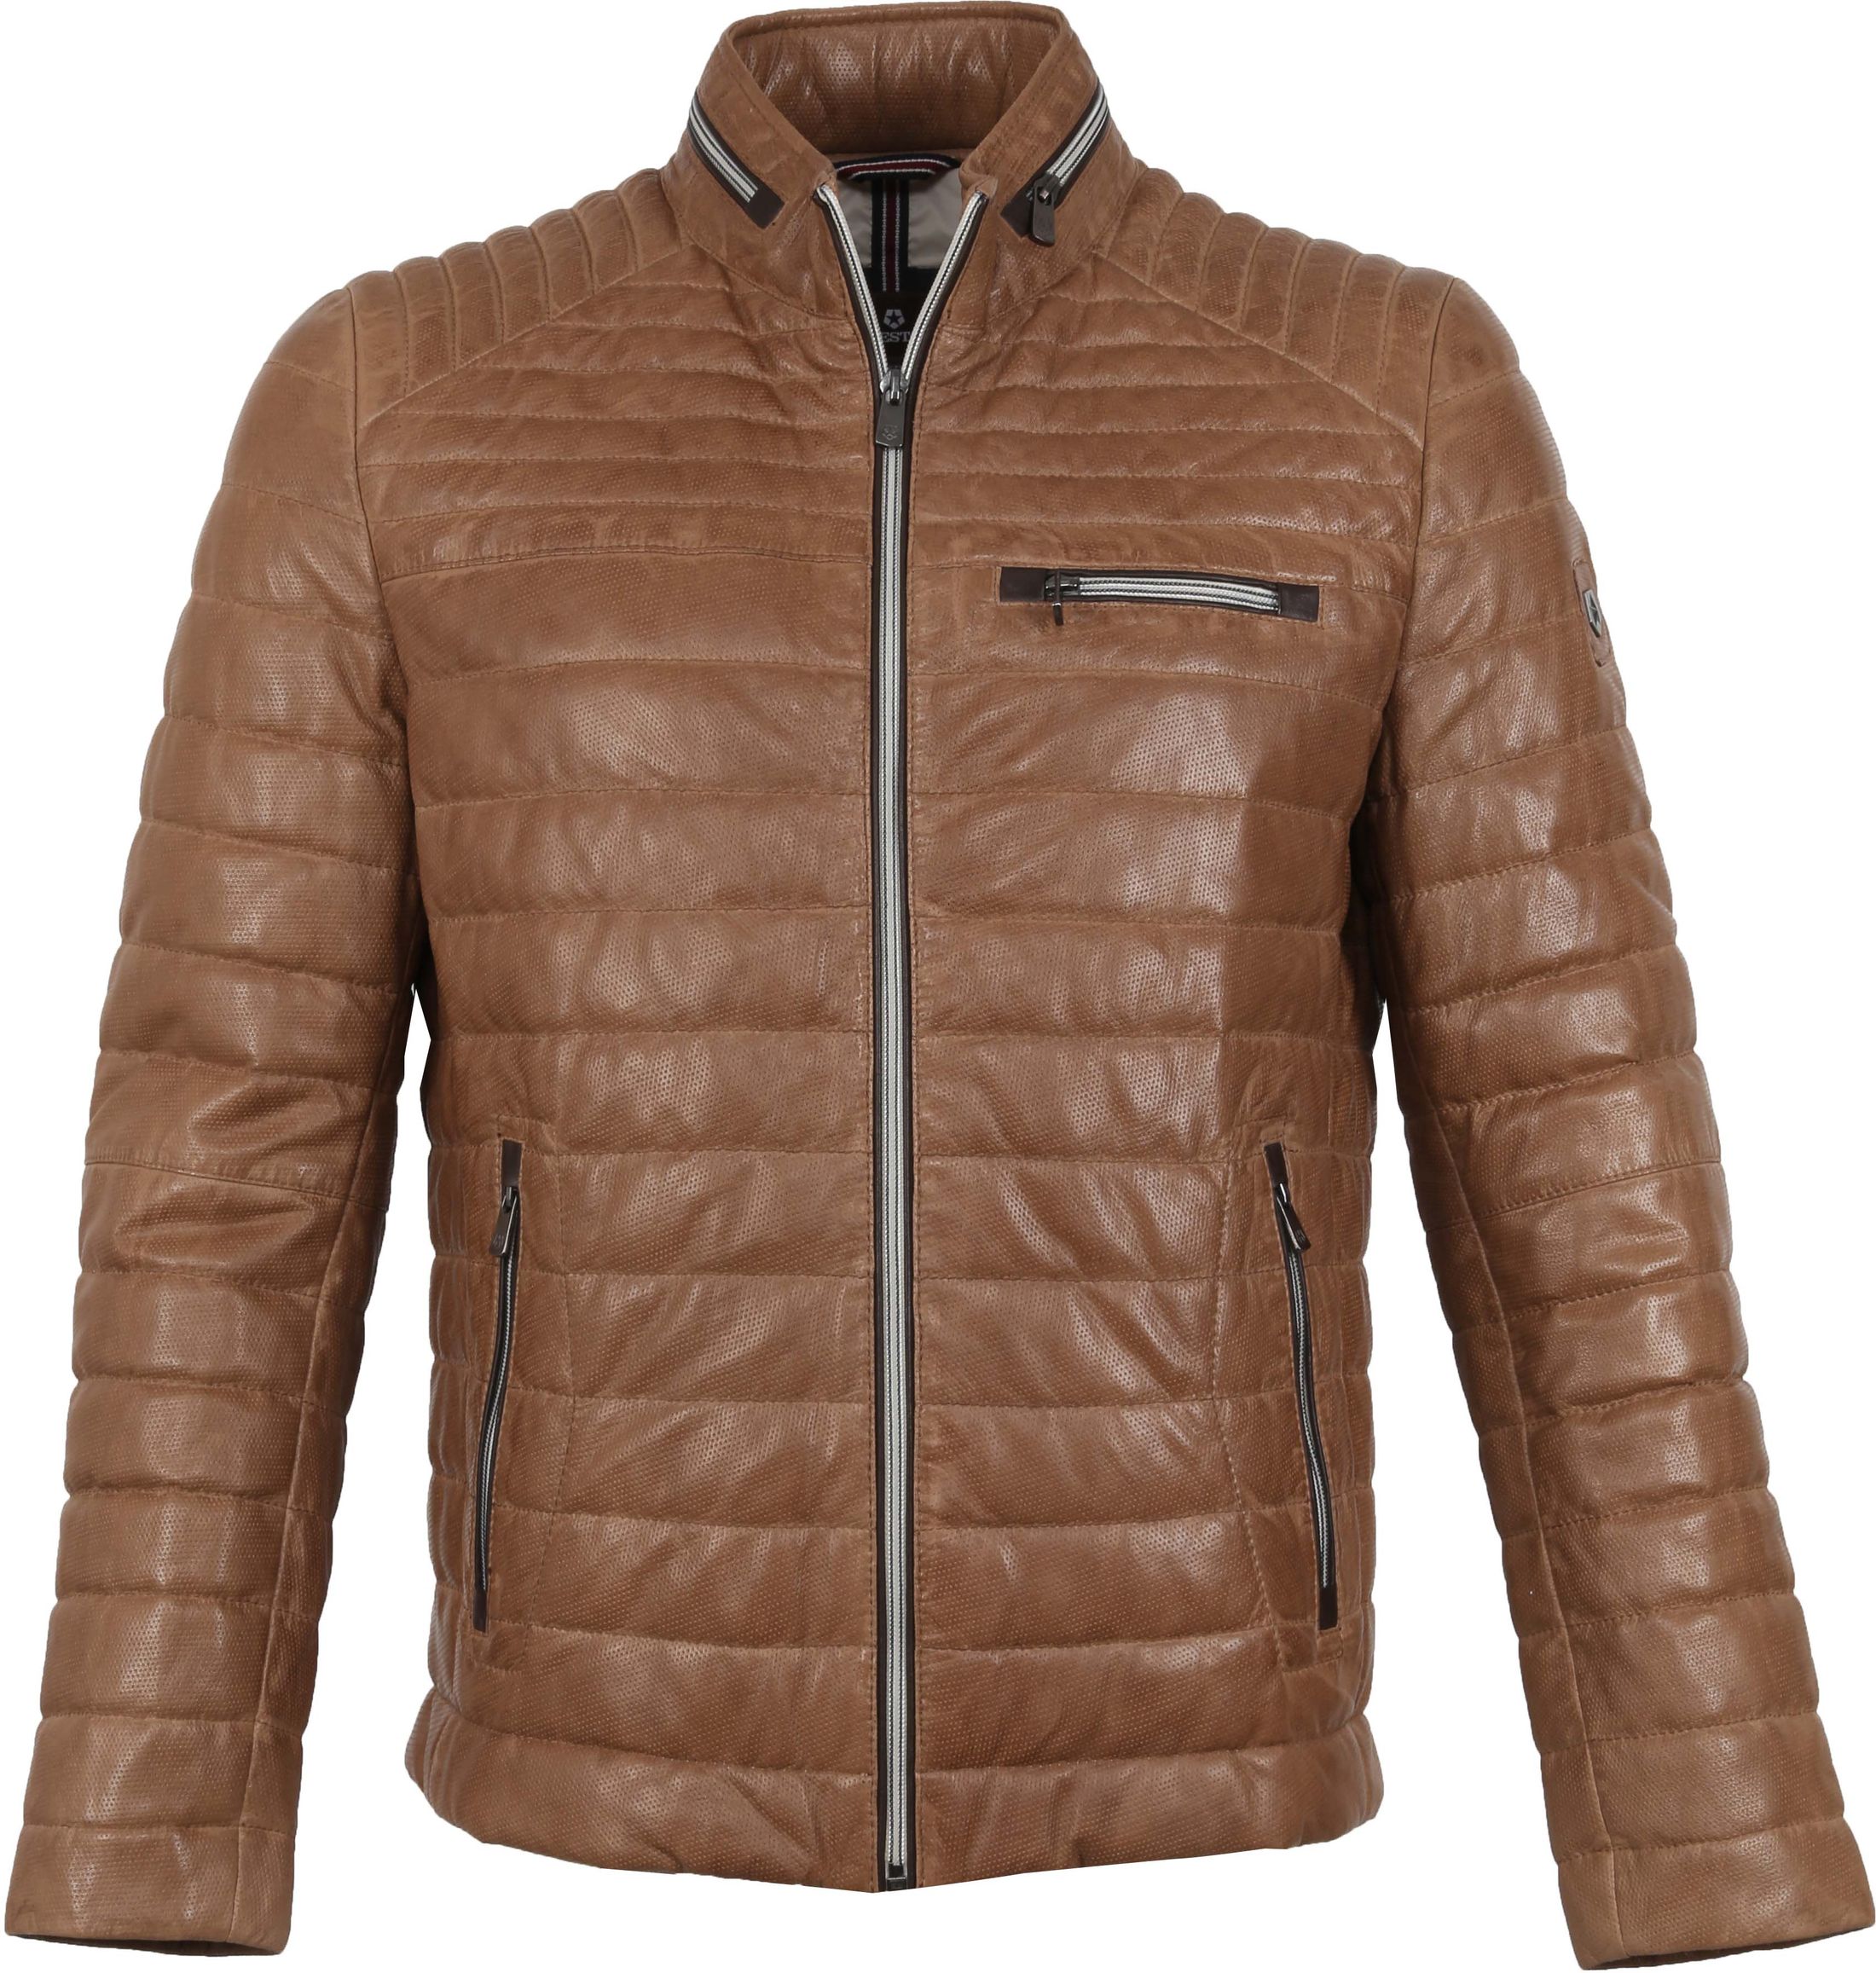 Milestone Terenzio Leather Jacket Brown Taupe size 38-R